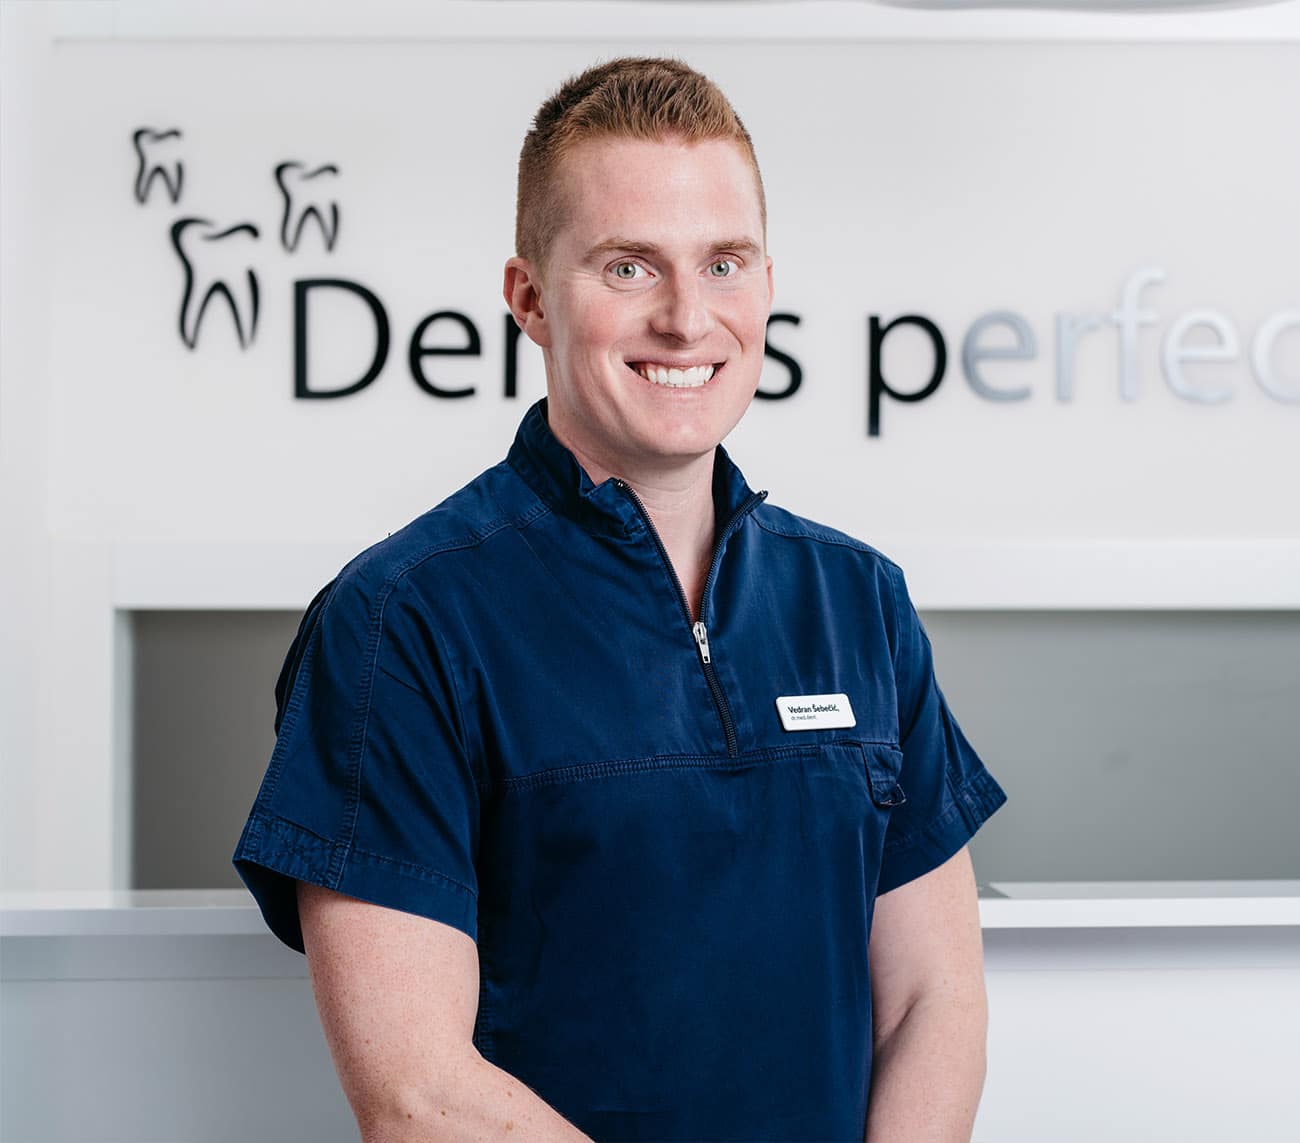 Dentus Perfectus ordinacija - jamstvo kvalitete